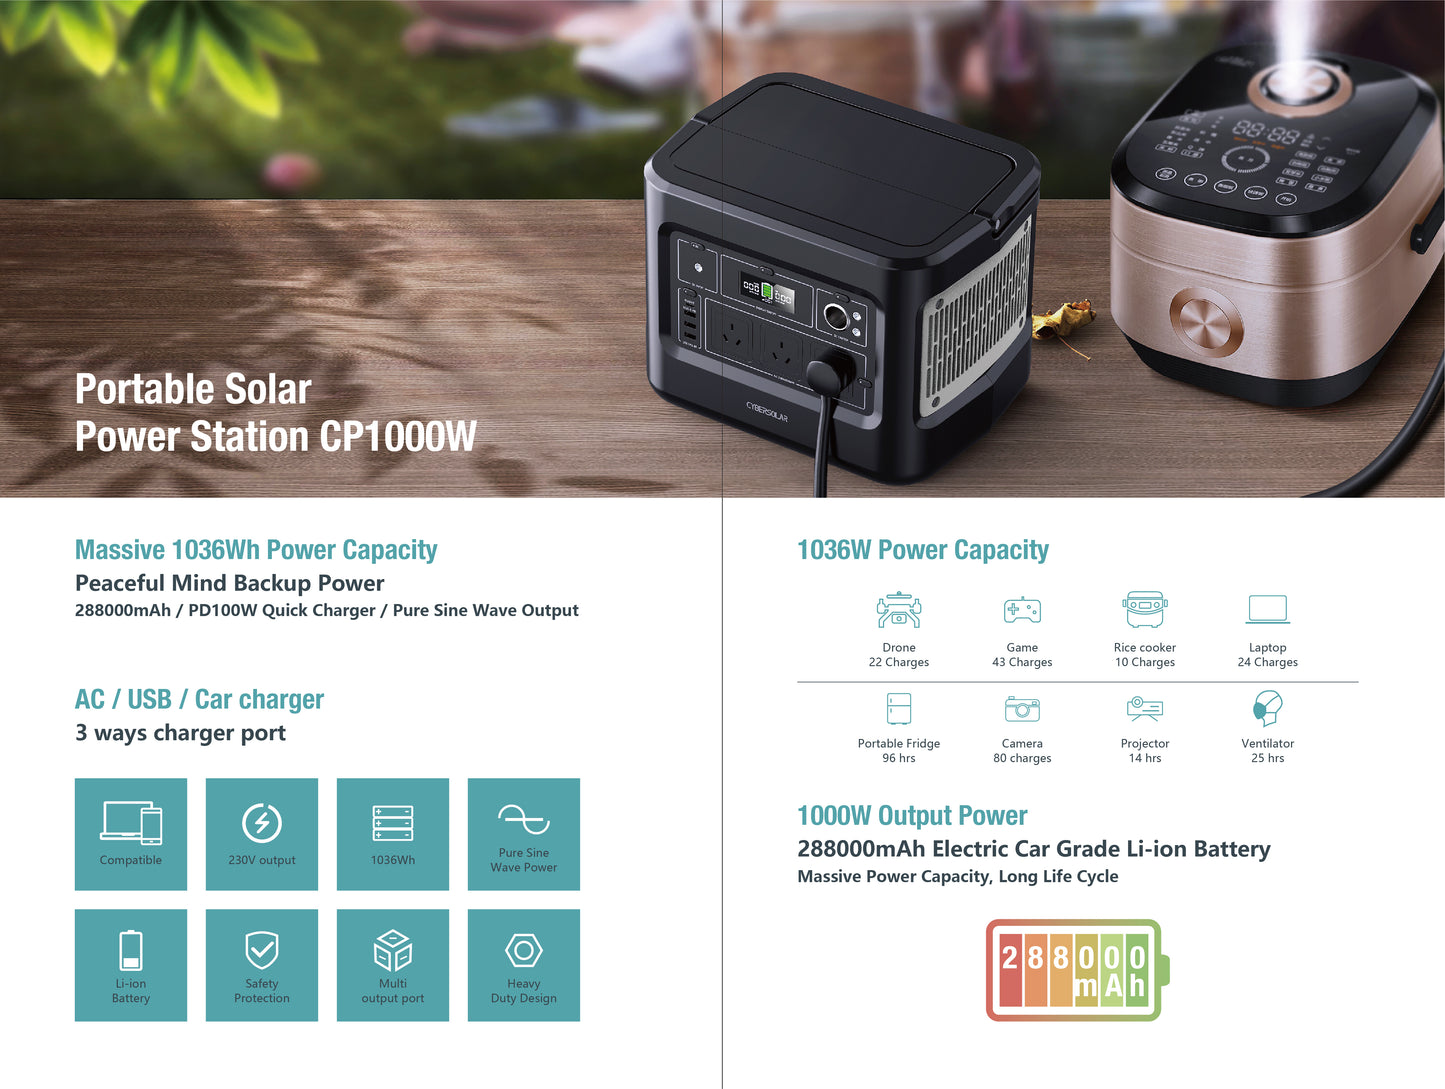 Portable Solar Power Station CP1000W (86ah)